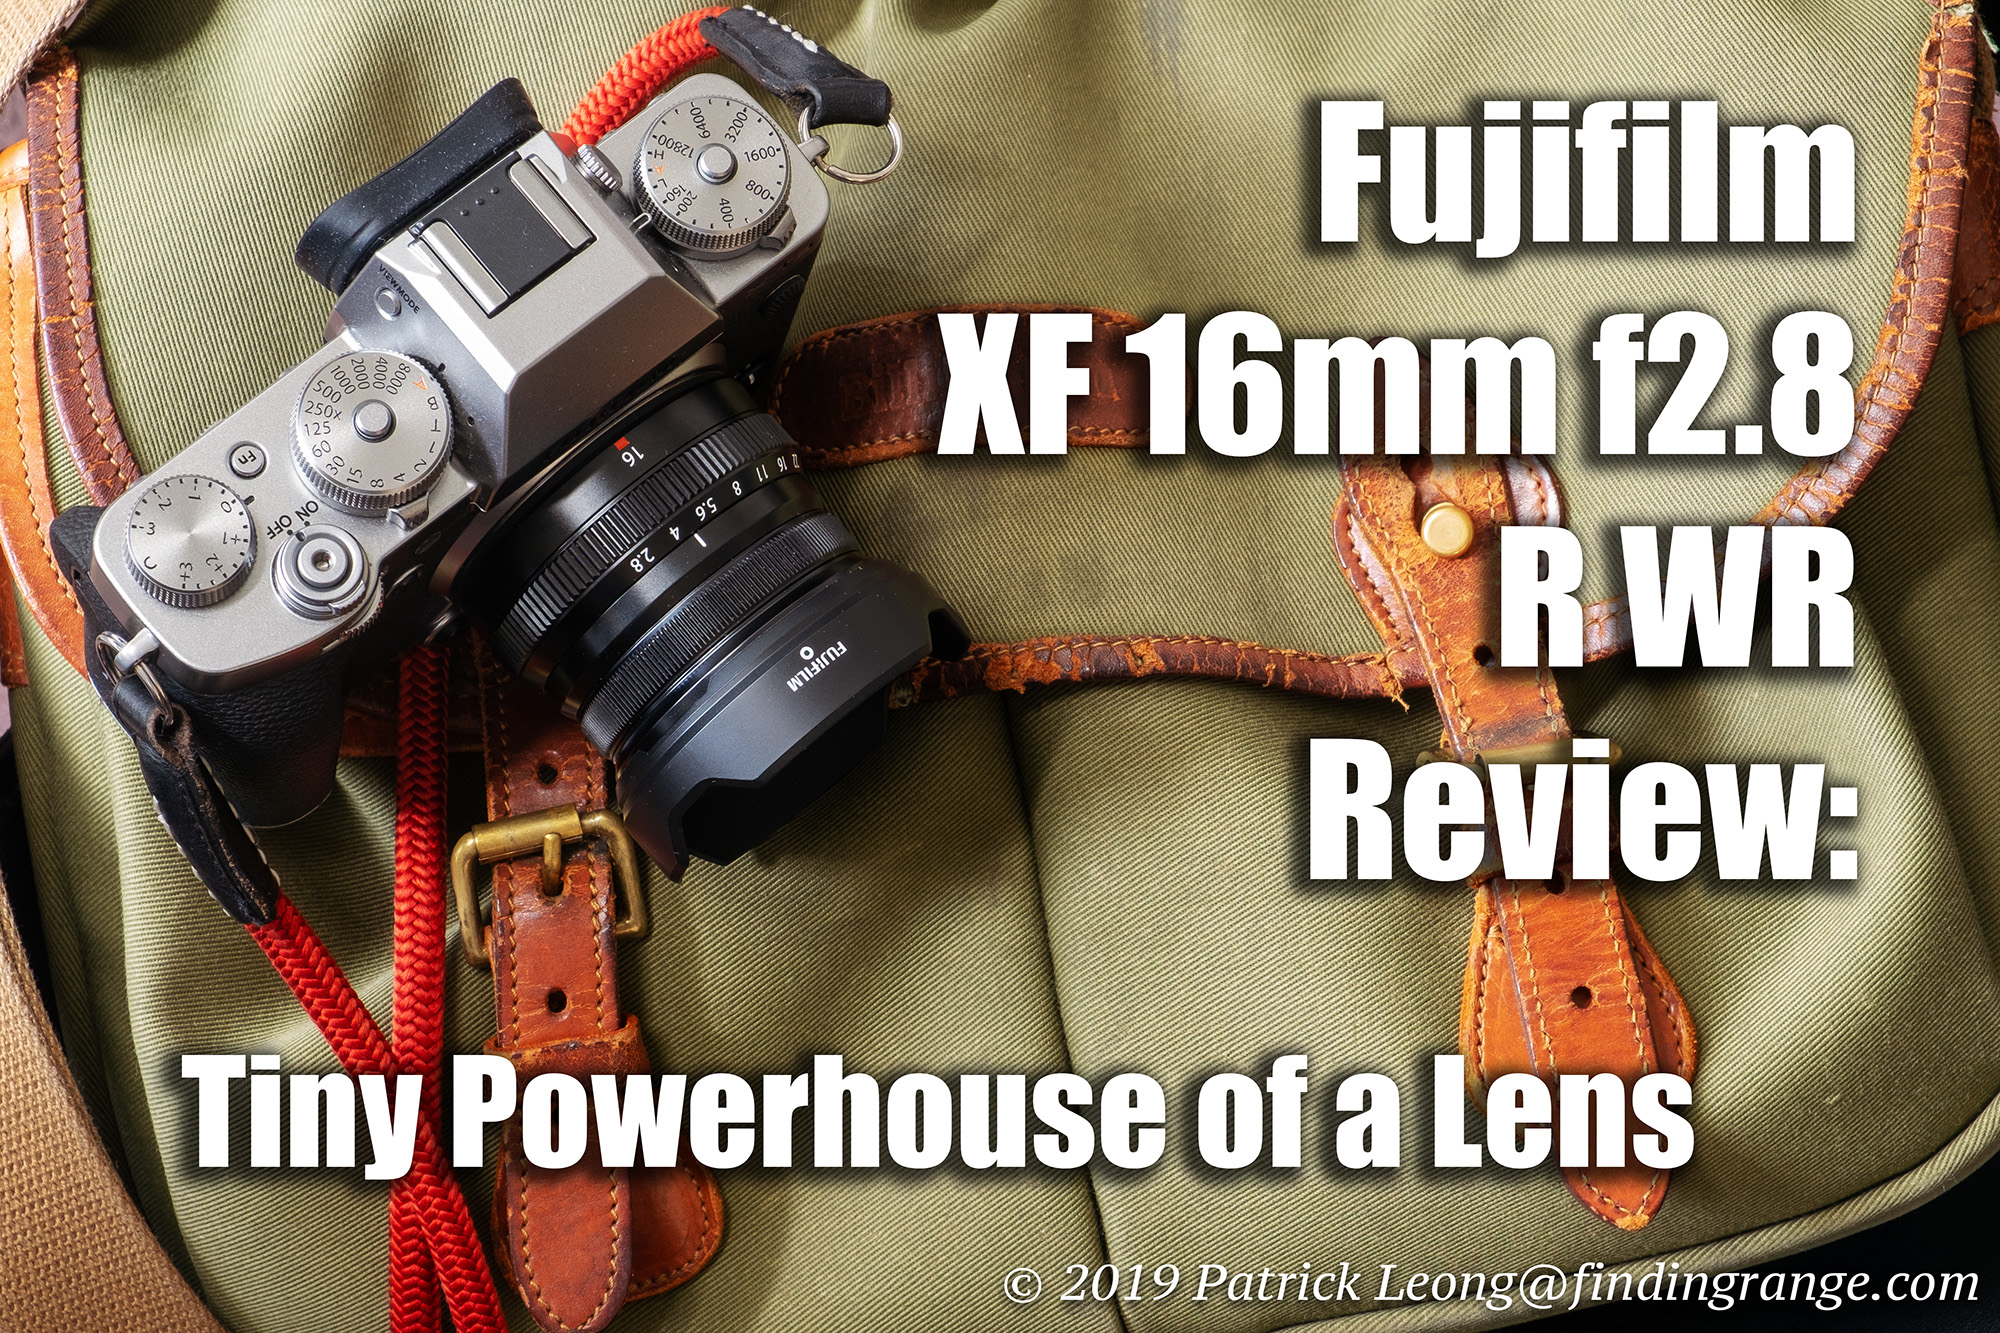 Fujifilm XF 16mm f2.8 R WR Review: Tiny Powerhouse of a Lens